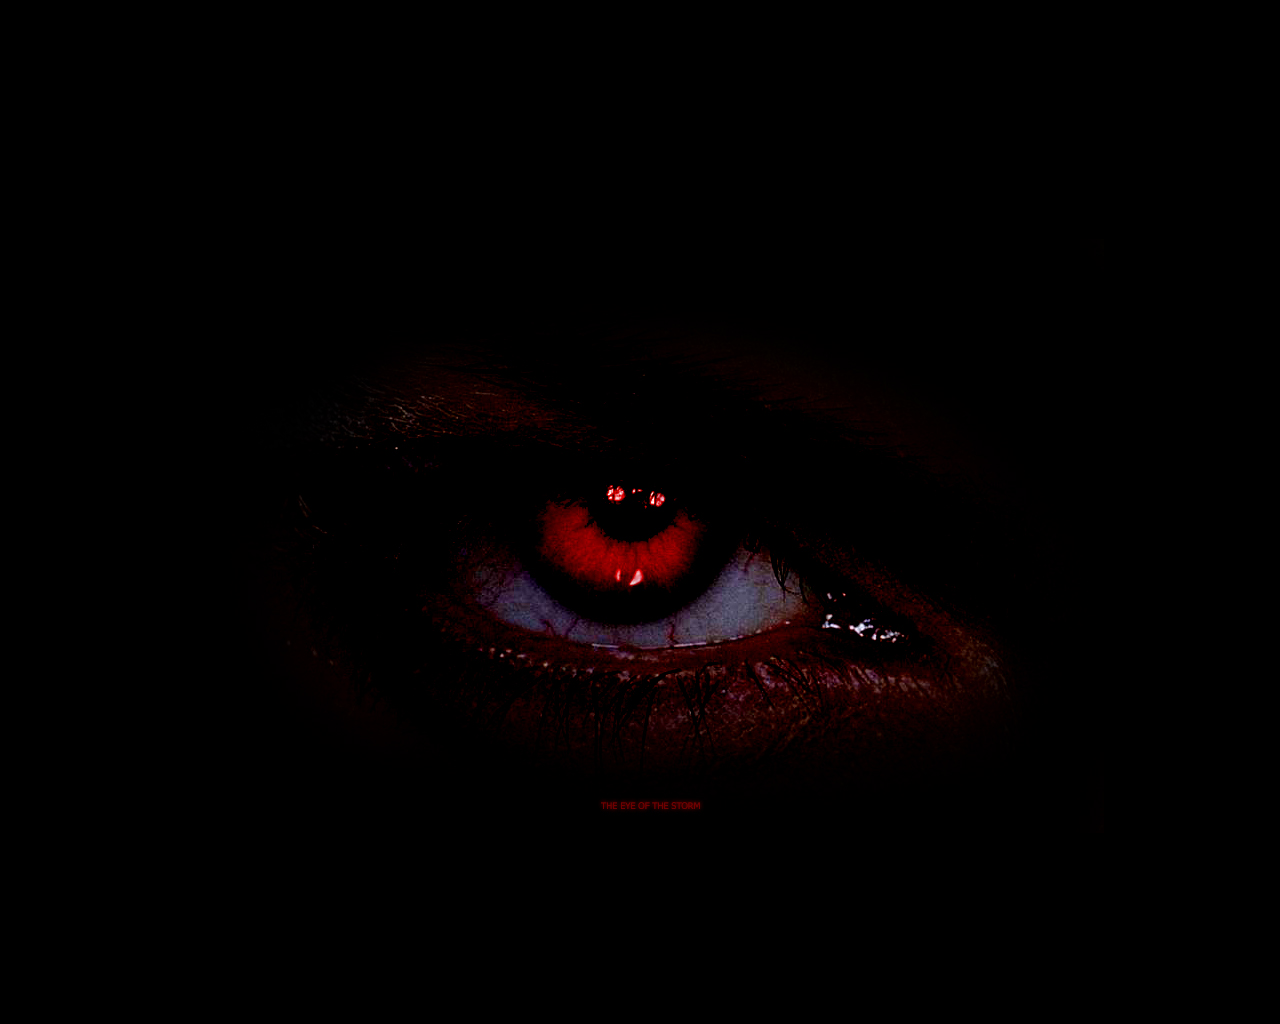 evil eye wallpaper,darkness,black,red,eye,organ